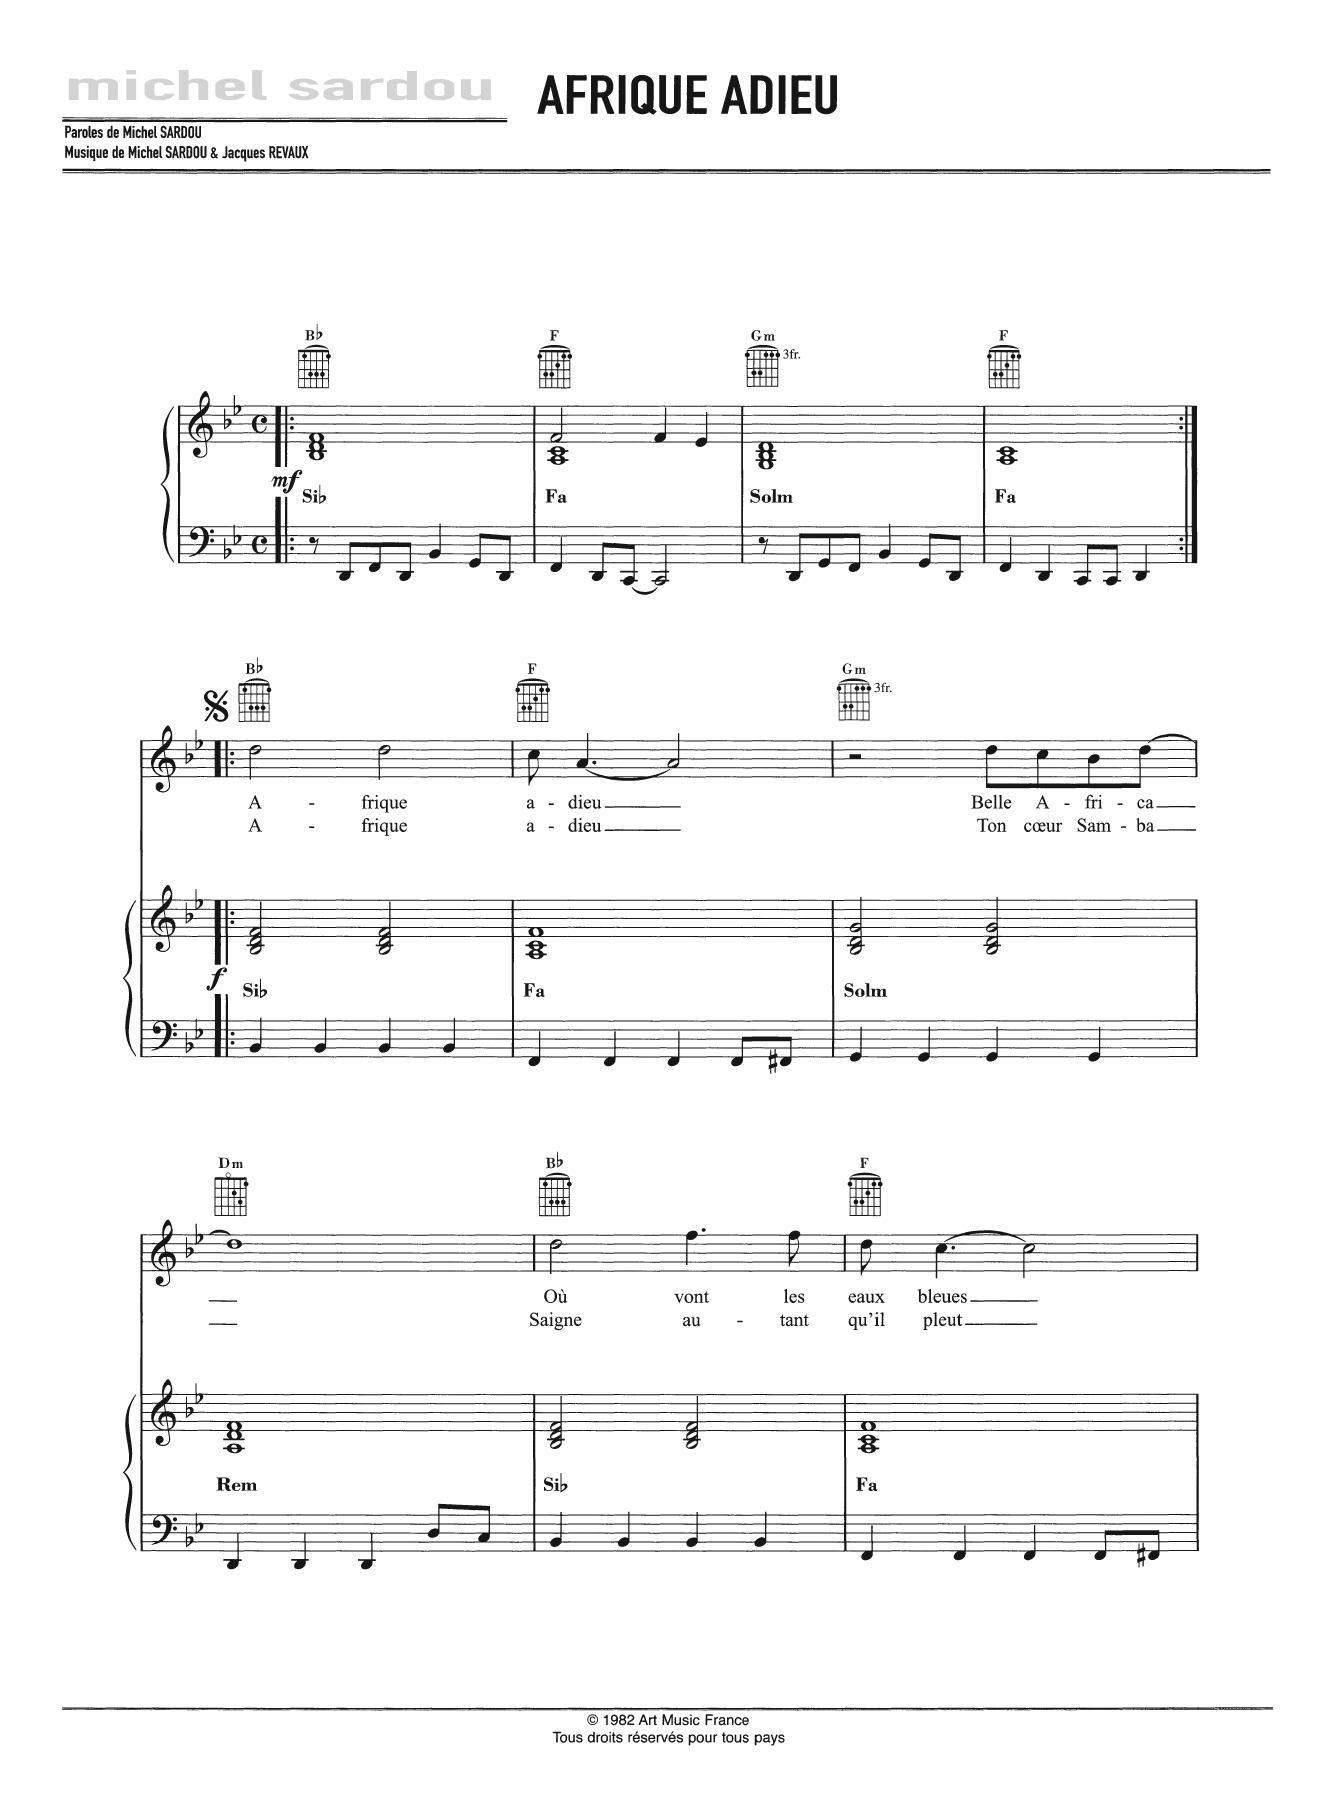 Michel Sardou Afrique Adieu Sheet Music Notes & Chords for Piano, Vocal & Guitar - Download or Print PDF